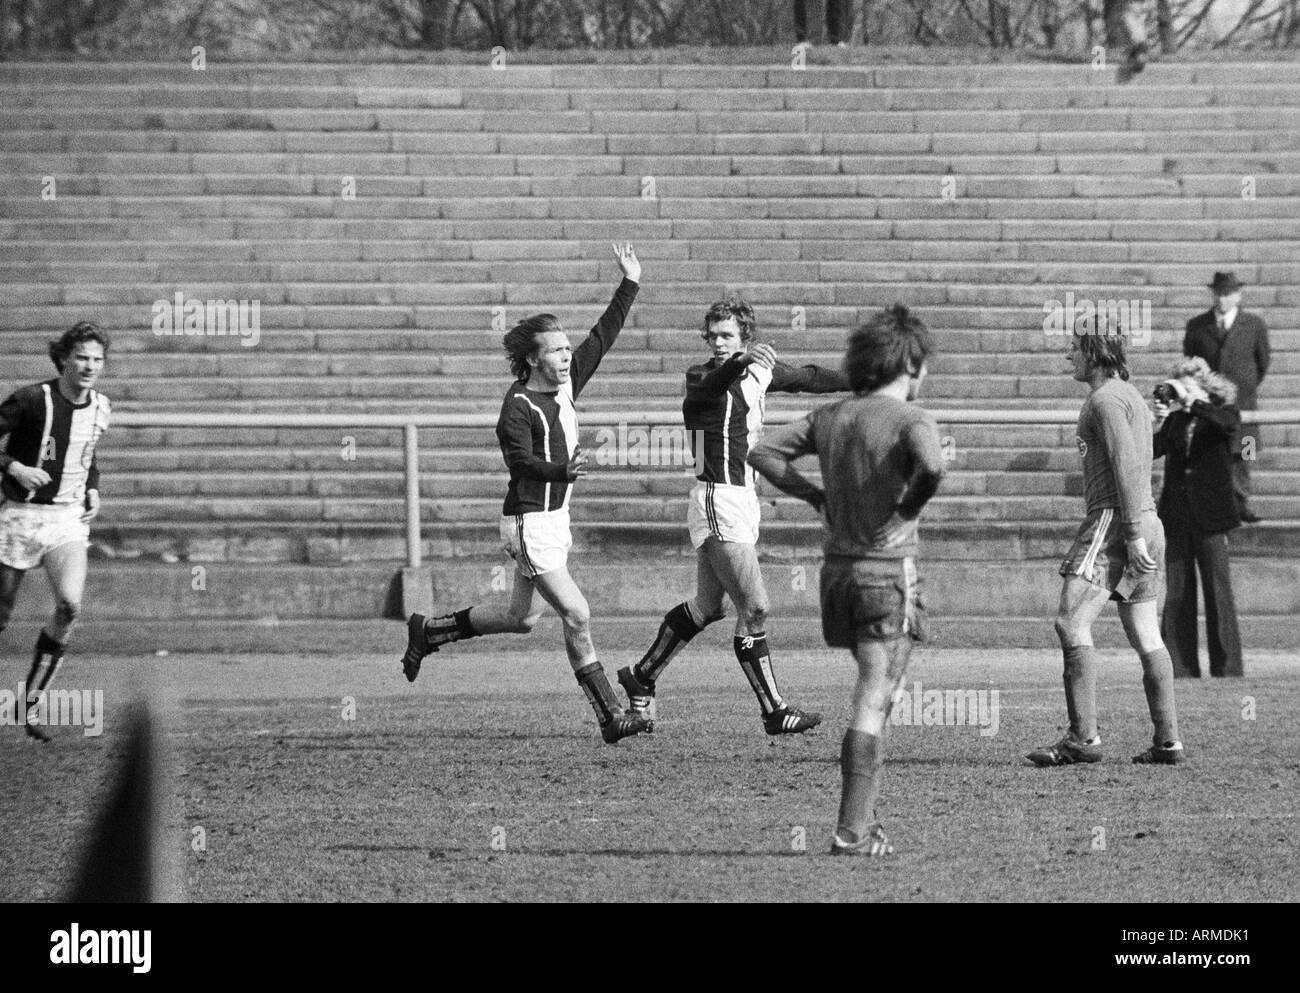 football, Regionalliga West, 1973/1974, Eintracht Gelsenkirchen versus 1. FC Muelheim 4:2, Sued Stadium Gelsenkirchen, Muelheim players rejoice at the 1:1 equaliser goal, f.l.t.r. Heiner Pottgiesser (Muelheim), goal scorer Herbert Bals (Muelheim), Holger Stock Photo